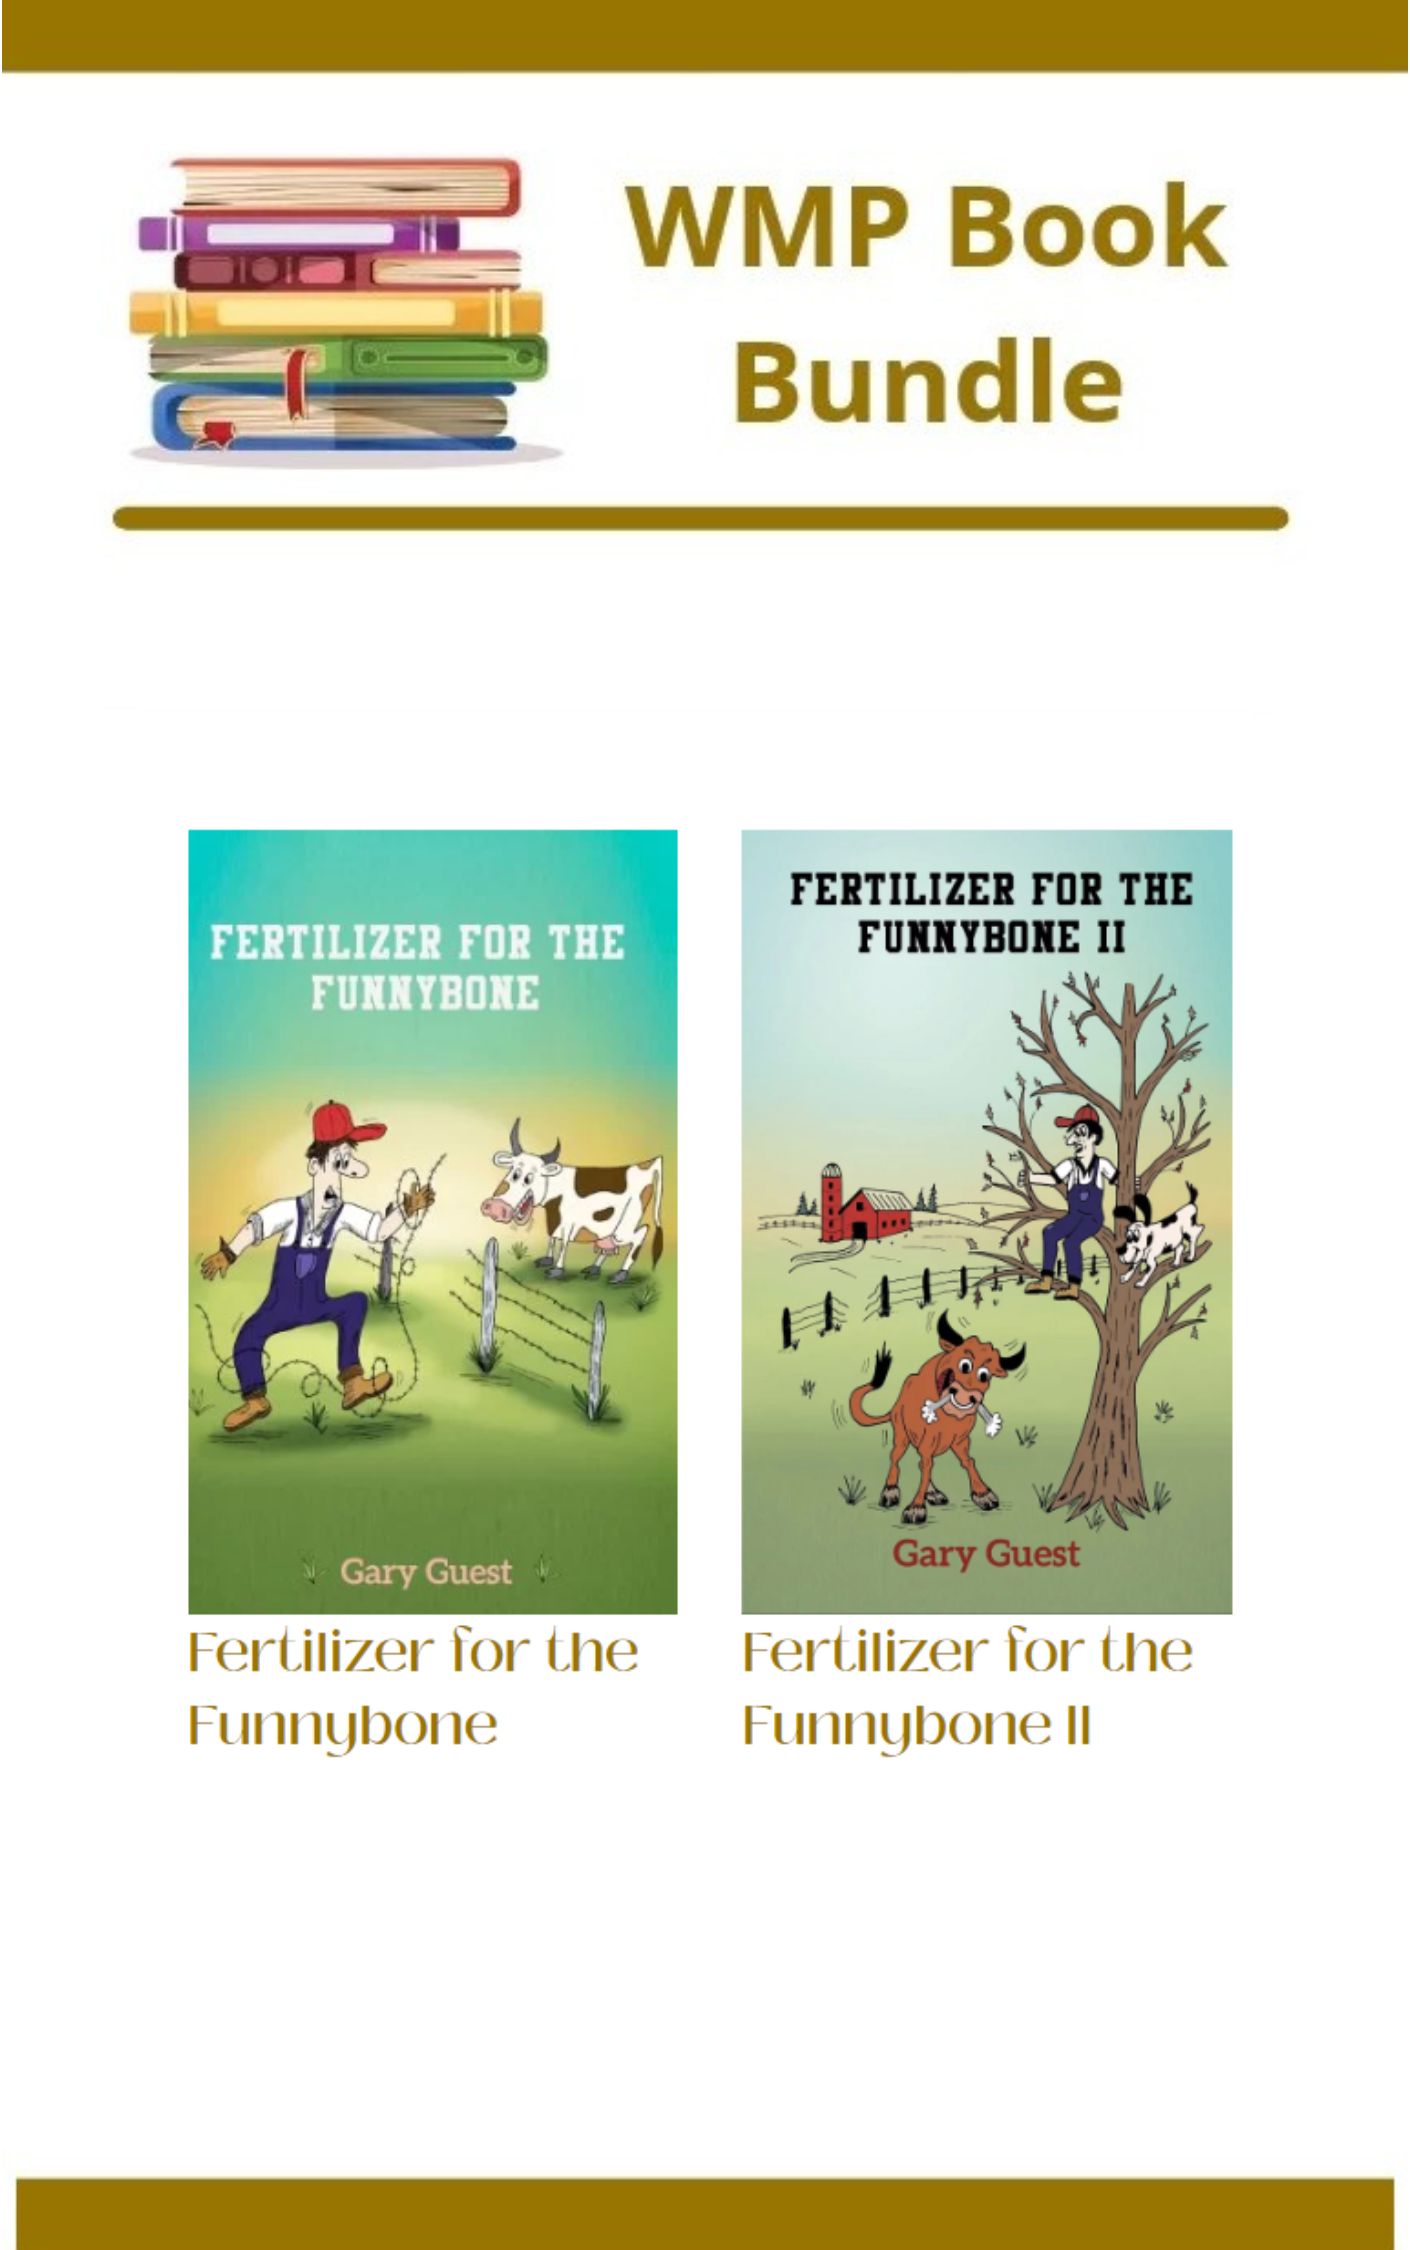 Fertilizer for the funnybone Series bundle